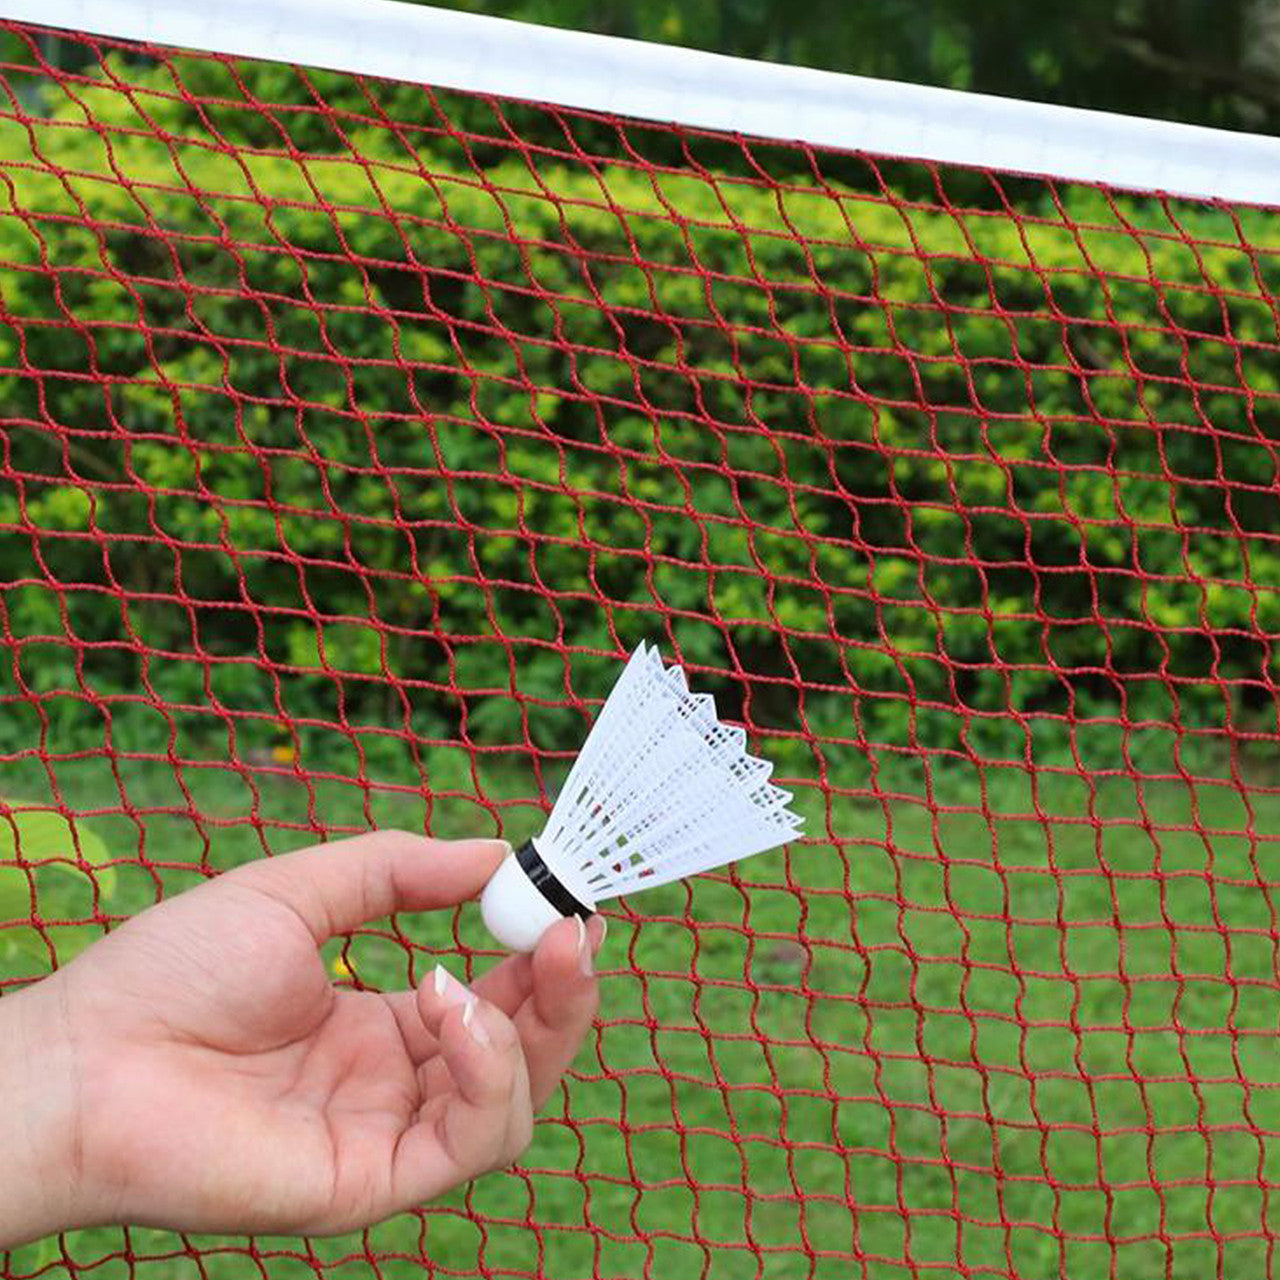 Outdoor Replacement Badminton Net, Indoor Standard Regulation Badminton Court Training Nets for Tennis, Soccer Tennis, Pickleball, Kids Volleyball